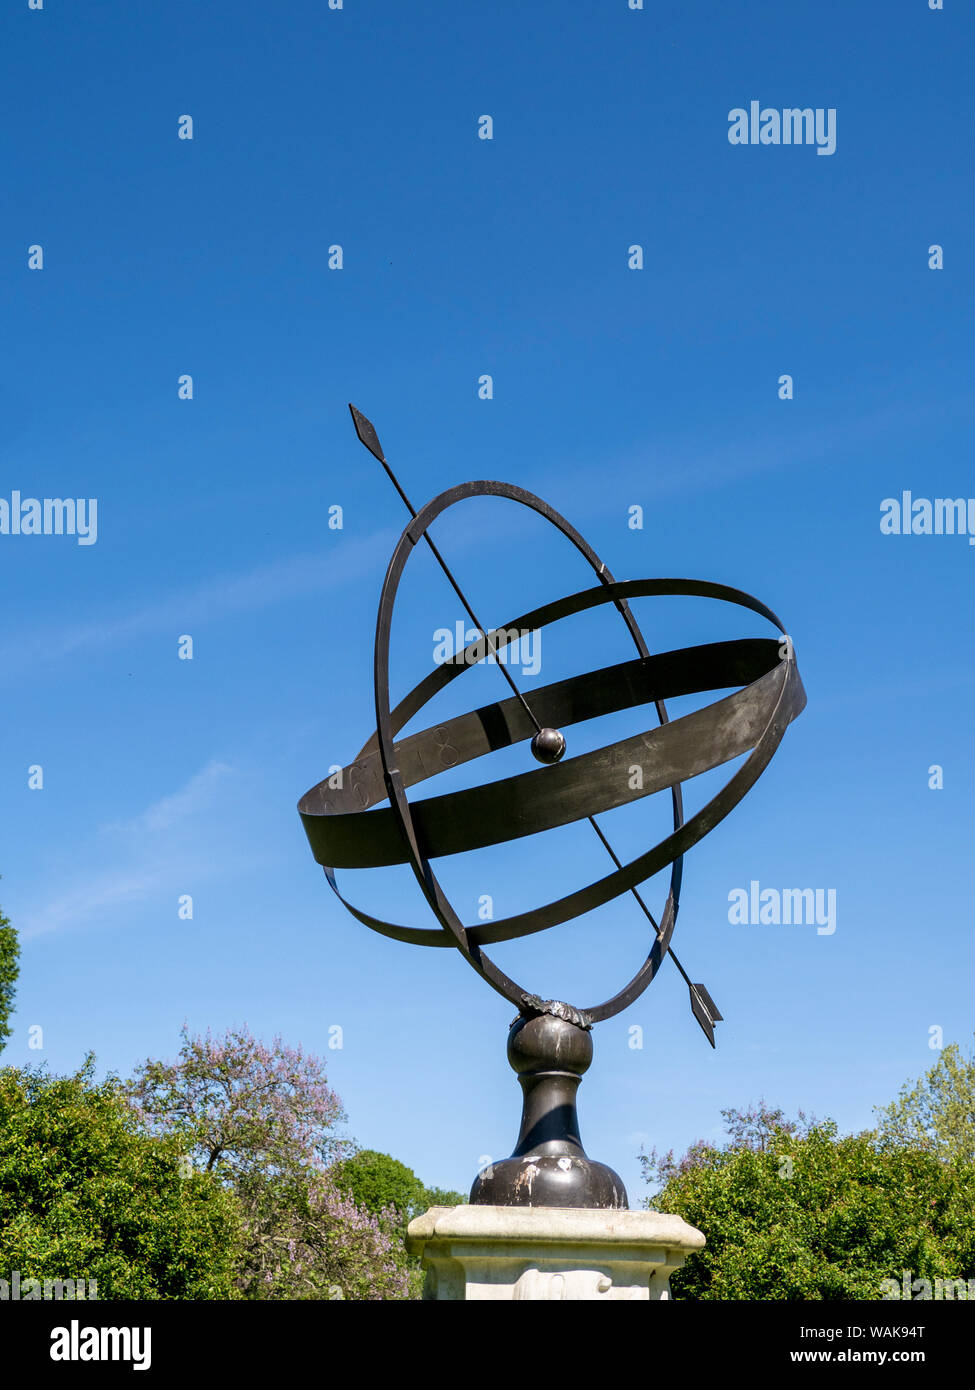 USA, Delaware. A large sundial in a garden. Stock Photo